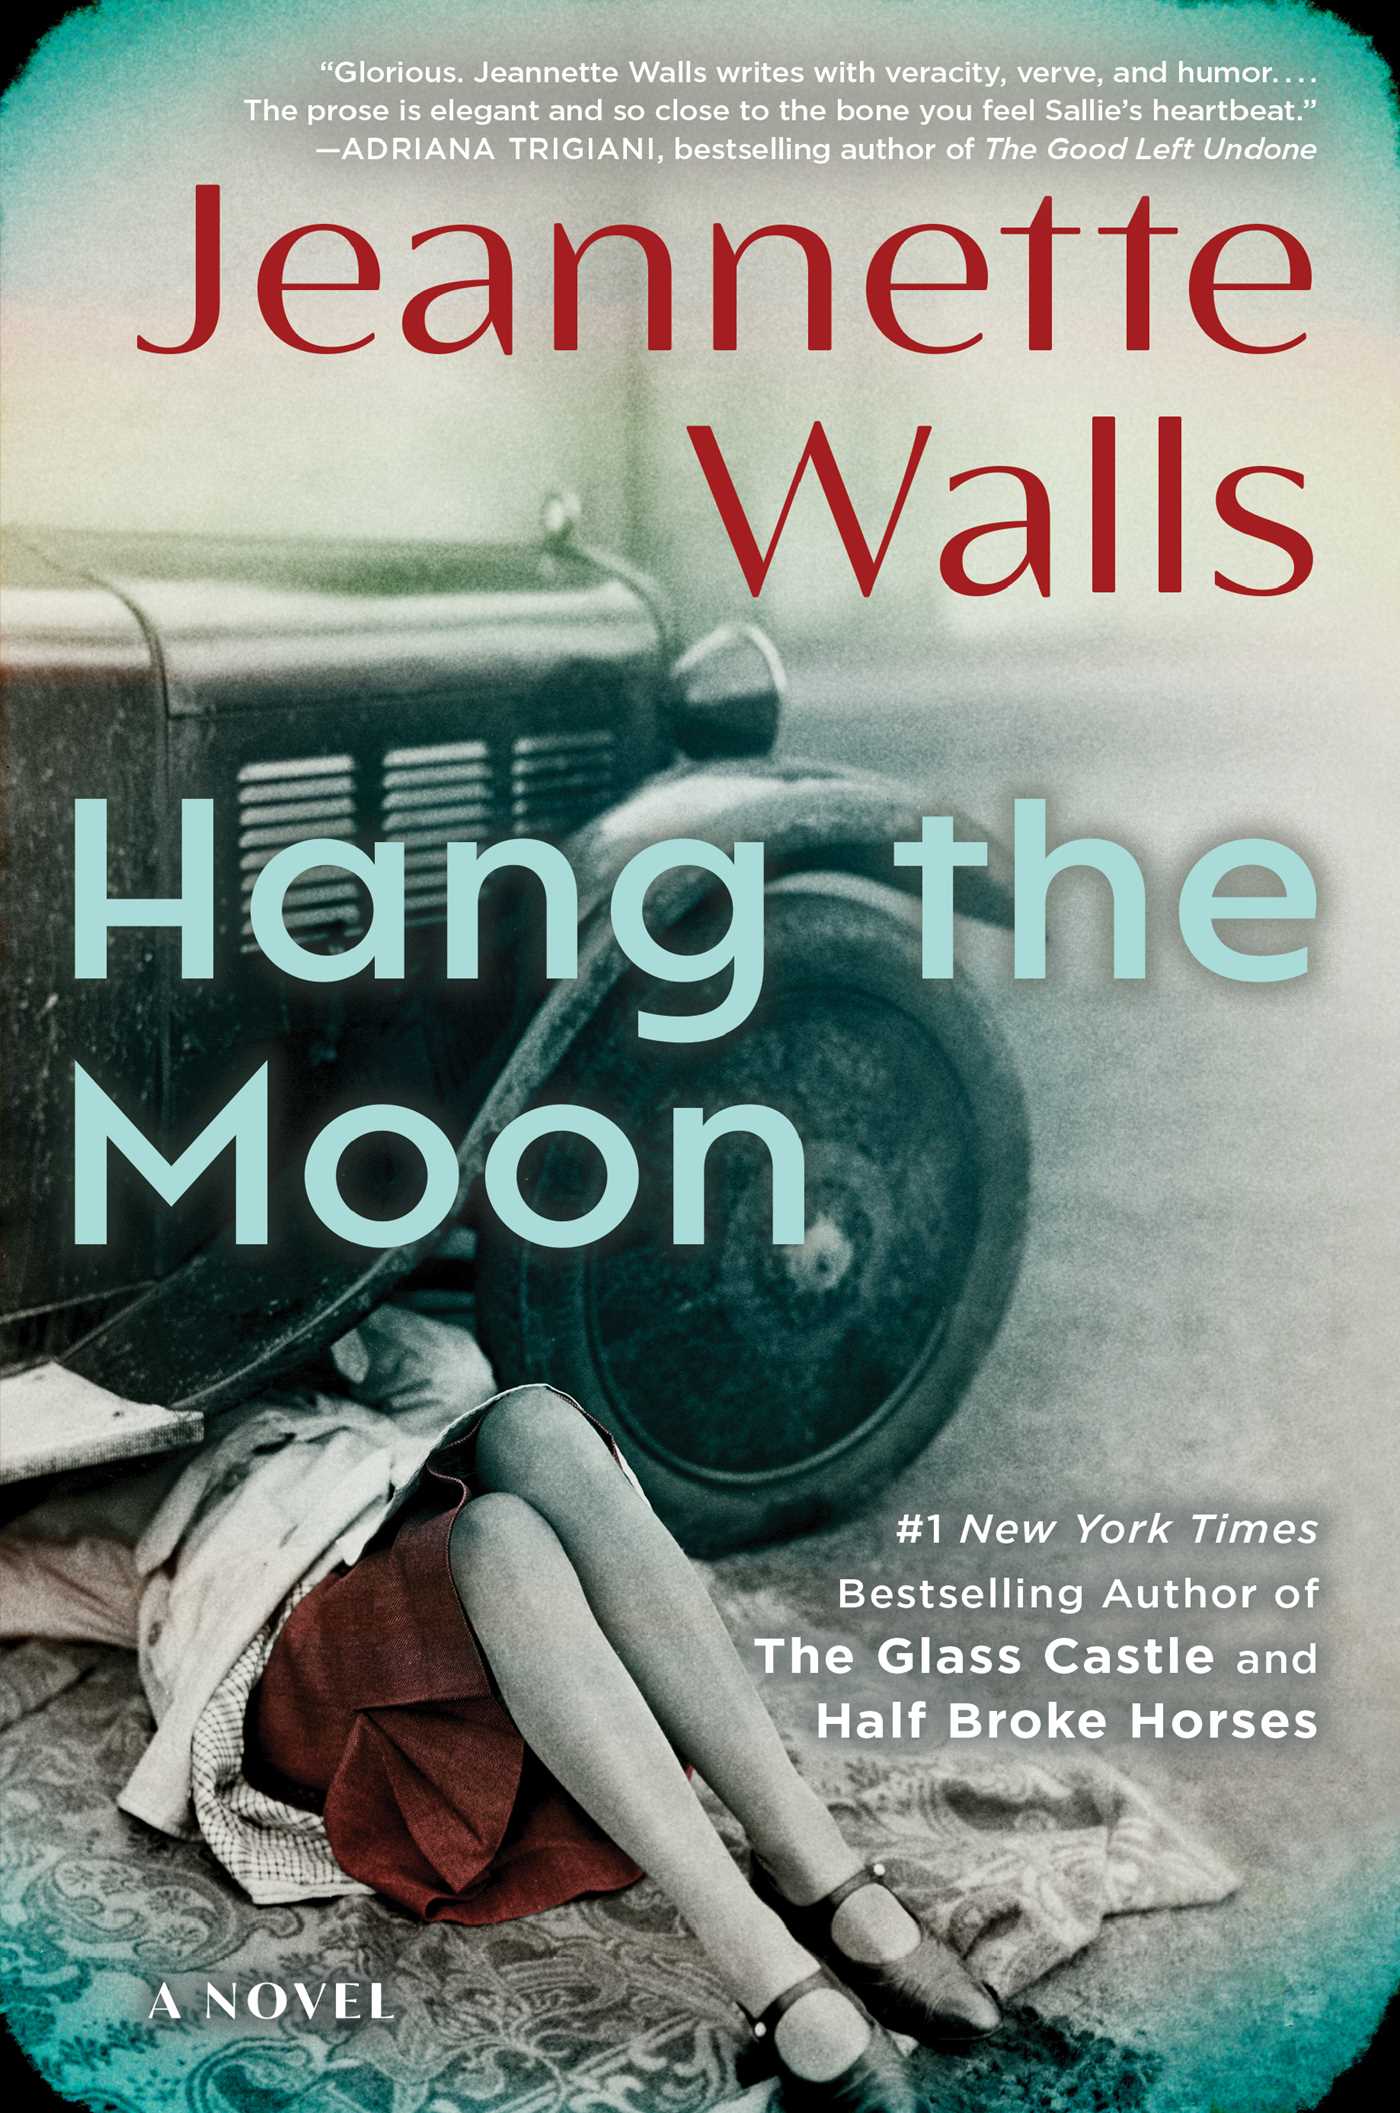 Hang the Moon / Jeannette Walls